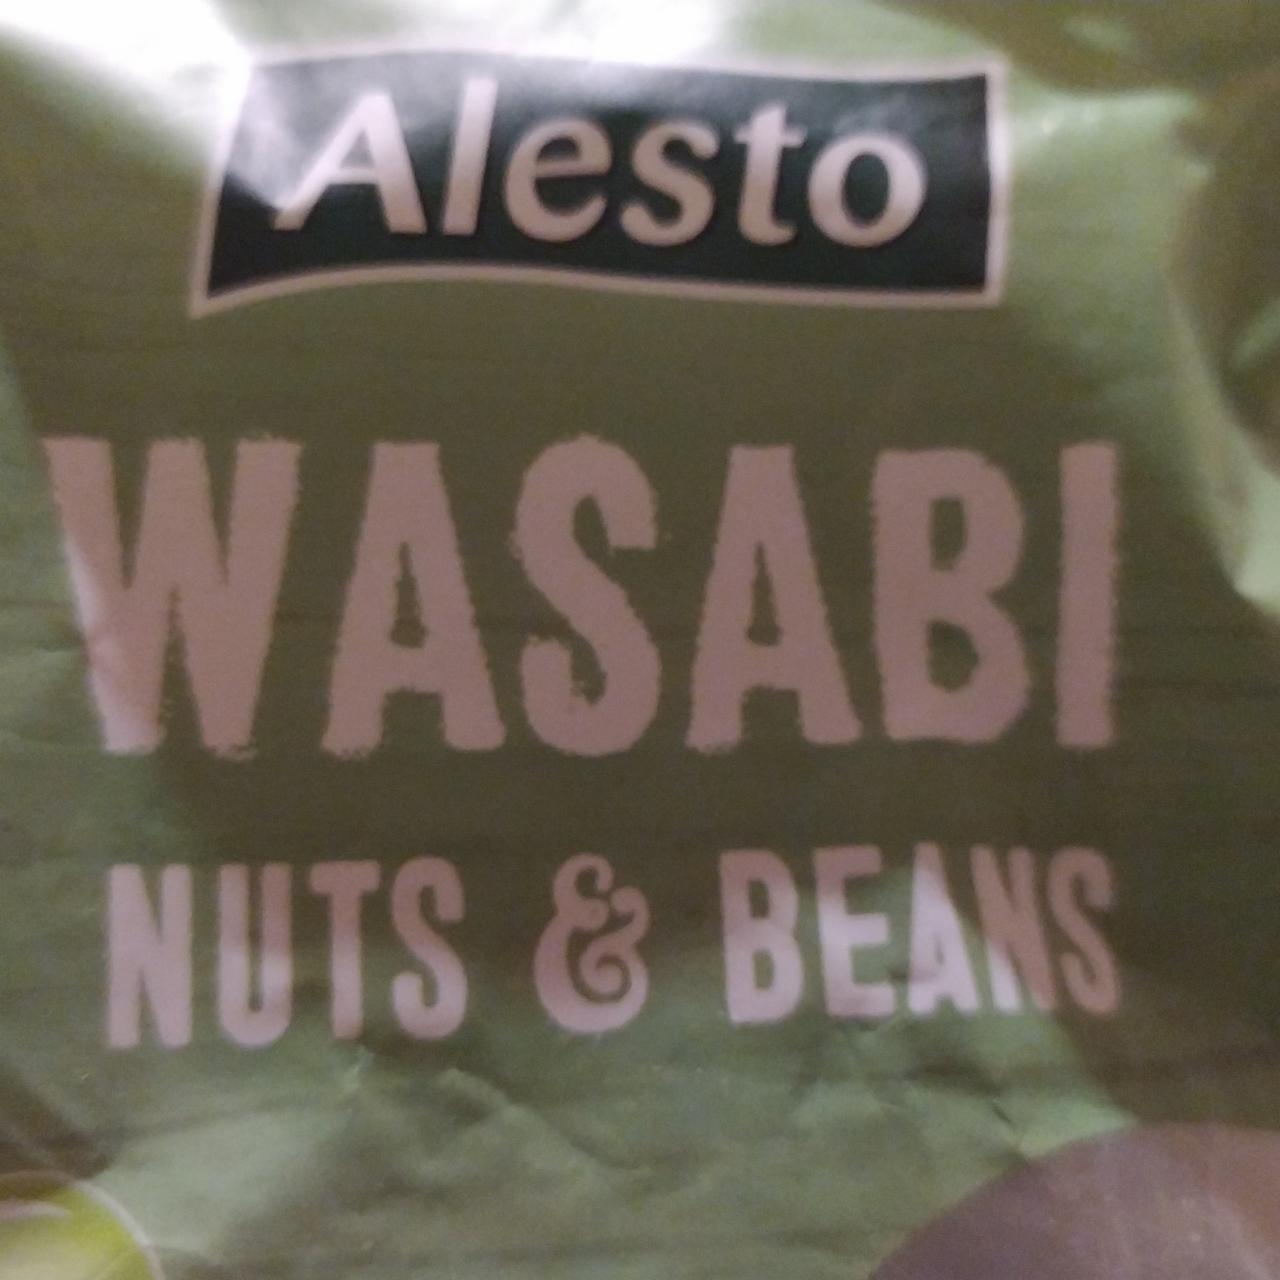 Fotografie - Wasabi Nuts & Beans Alesto